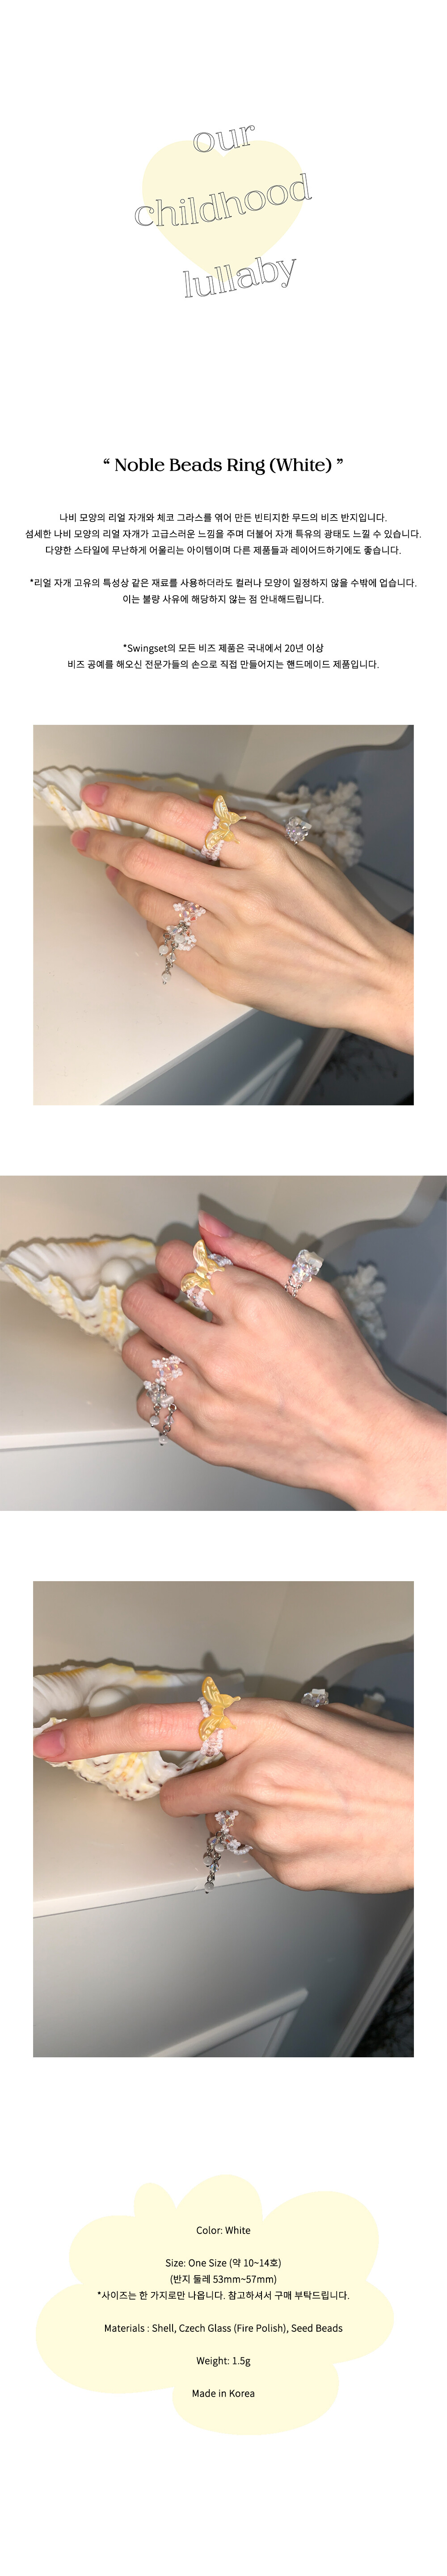 Noble Beads Ring (White)